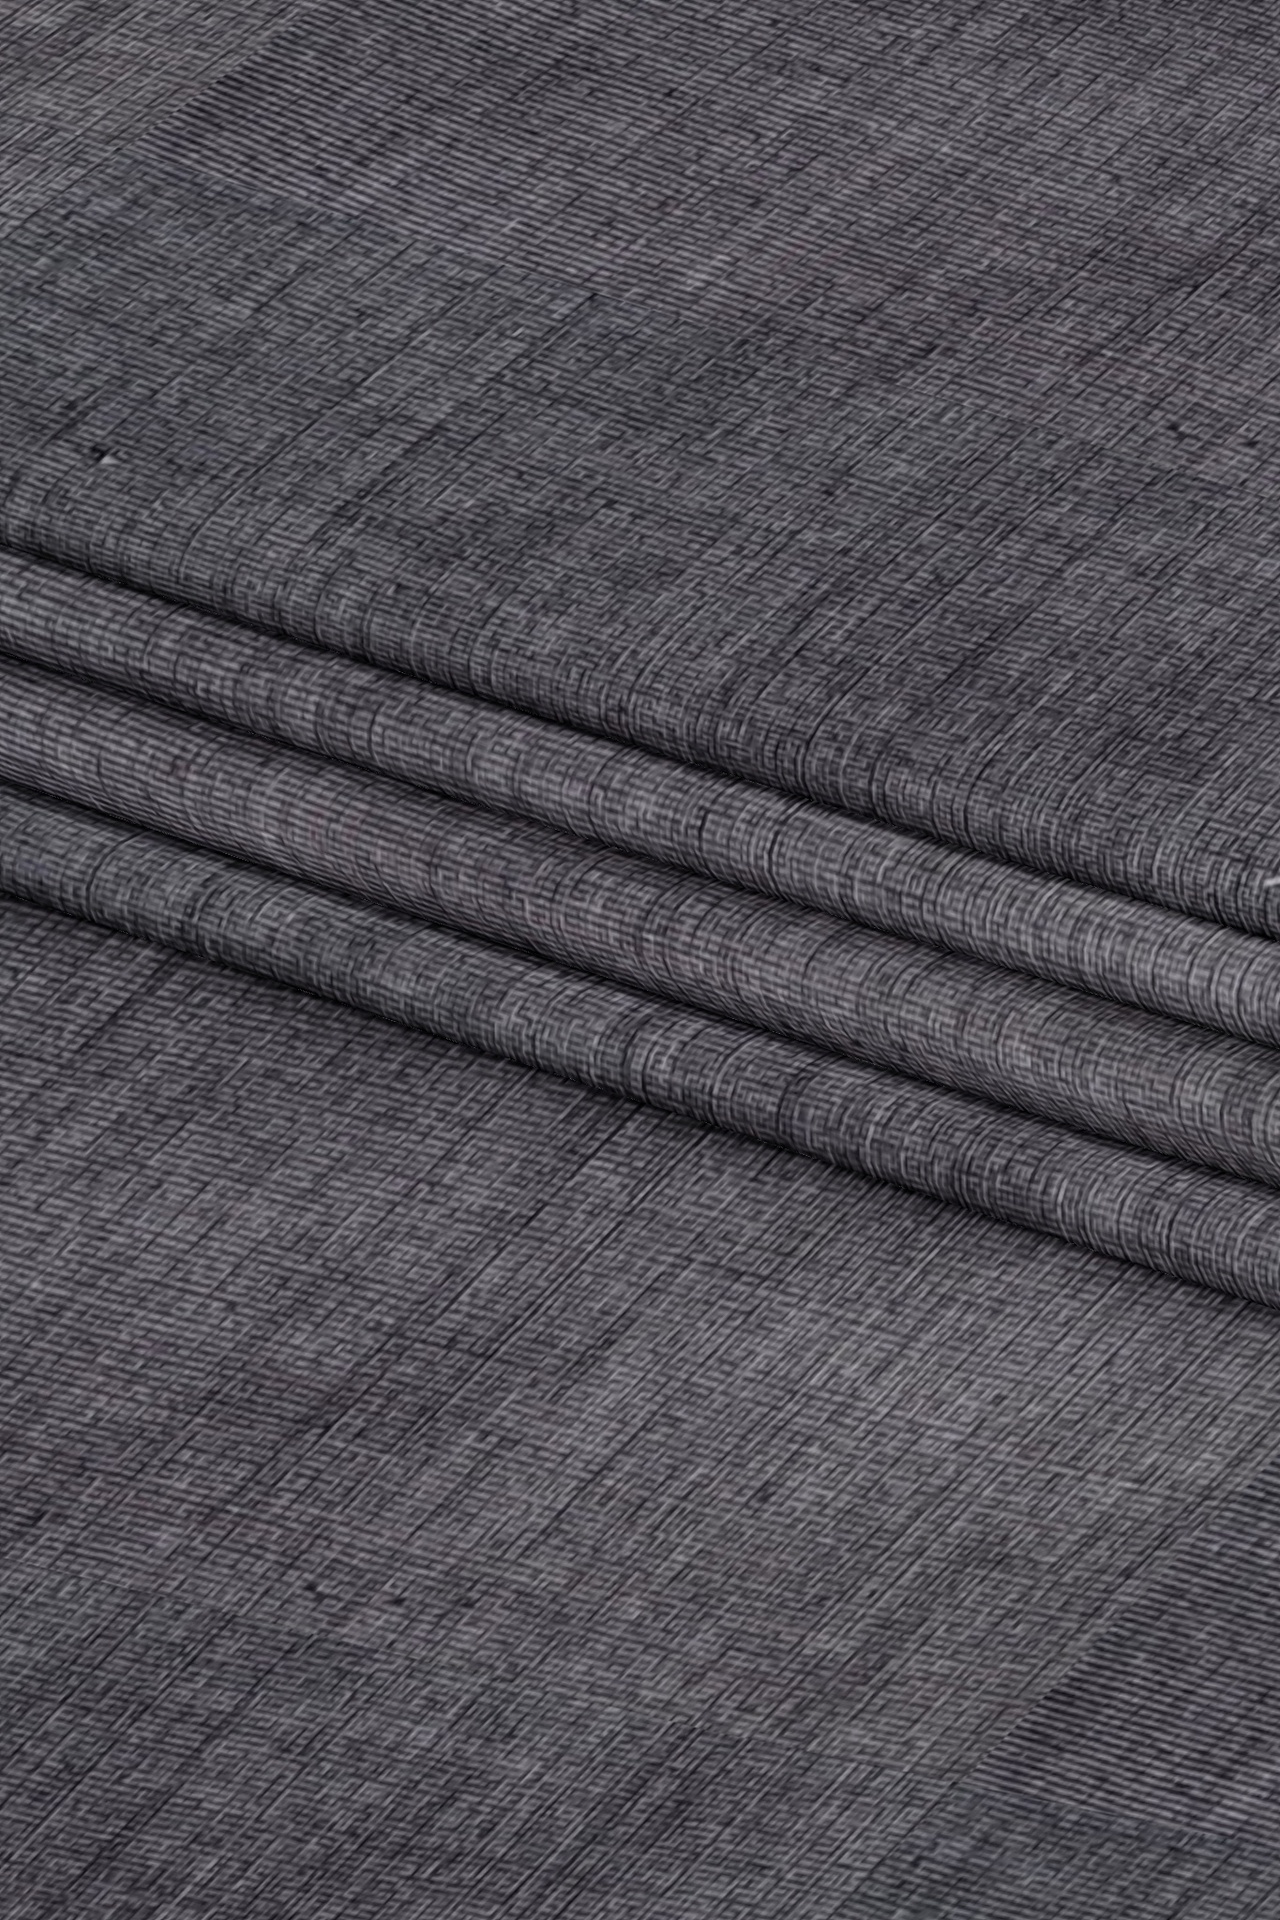 Black Ash Handspun Handwoven Cotton Fabric